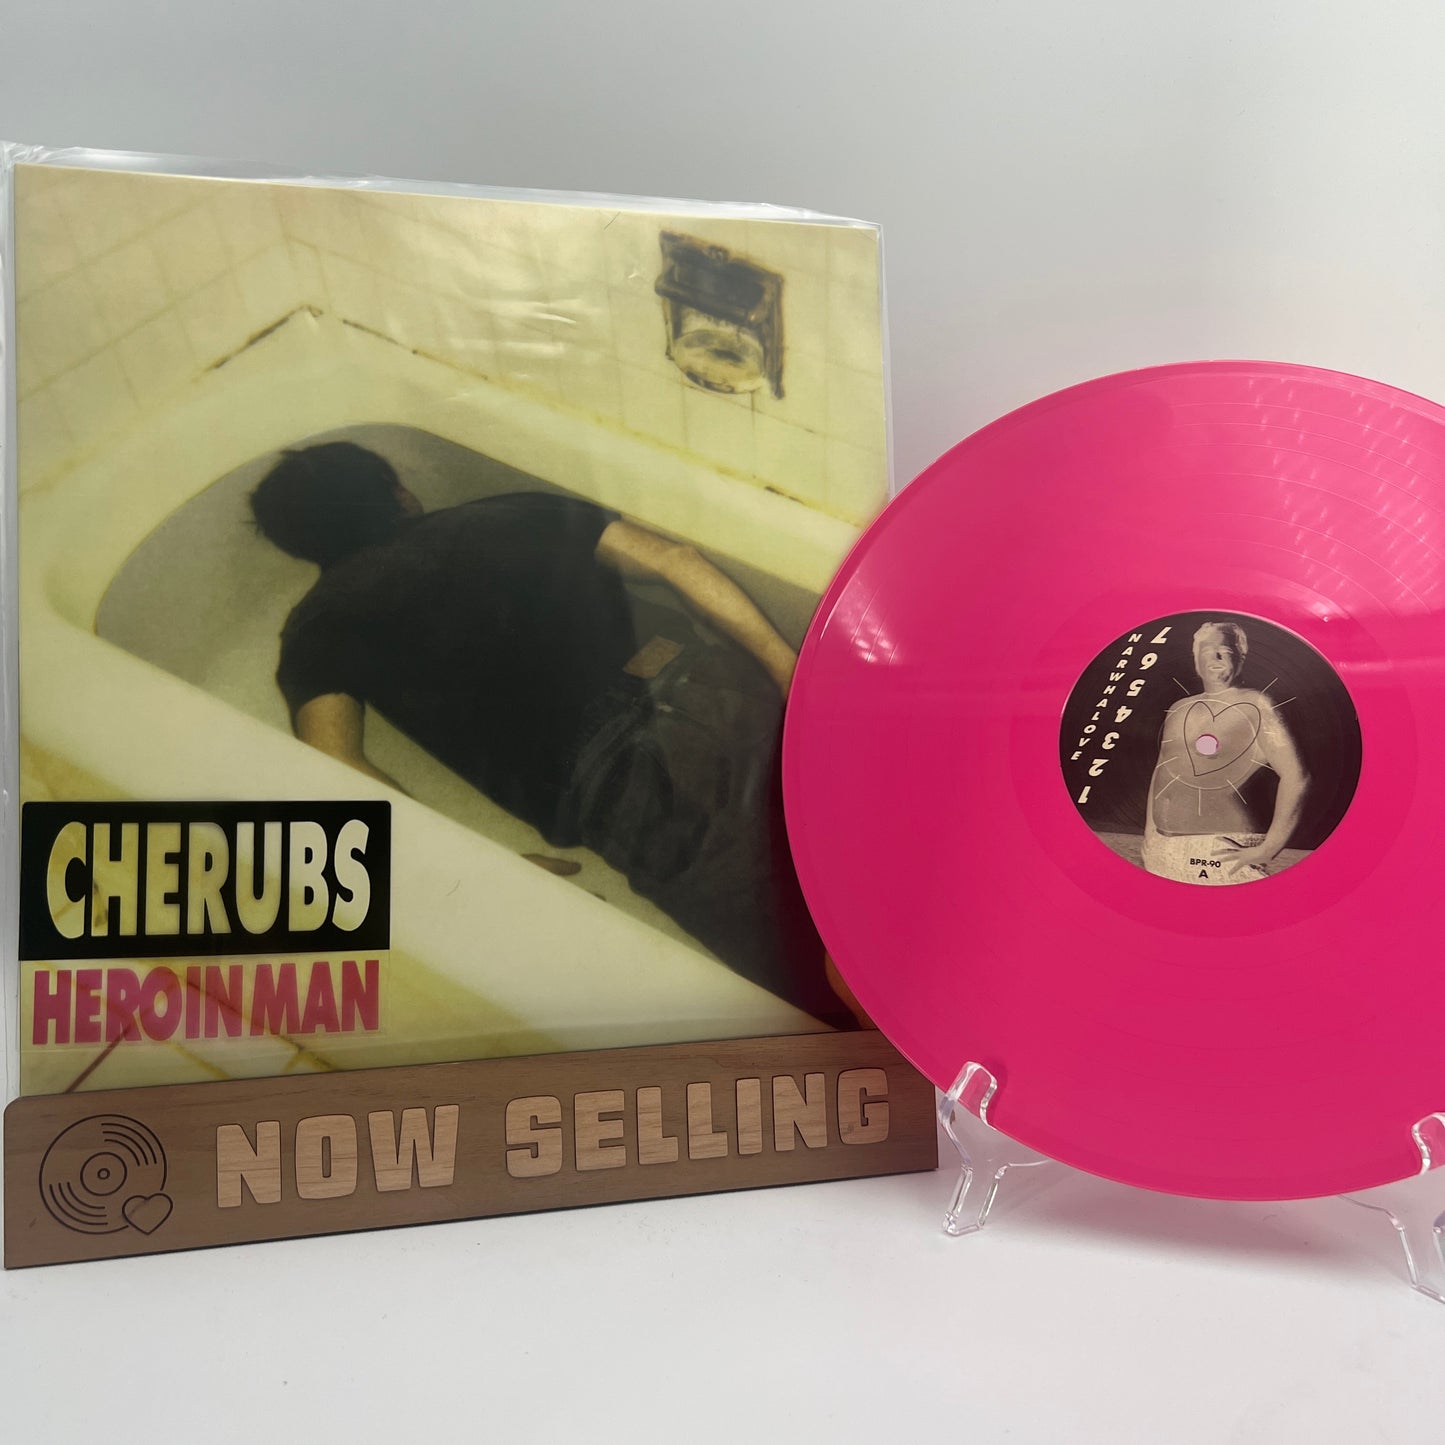 Cherubs - Heroinman Vinyl LP Hot Pink